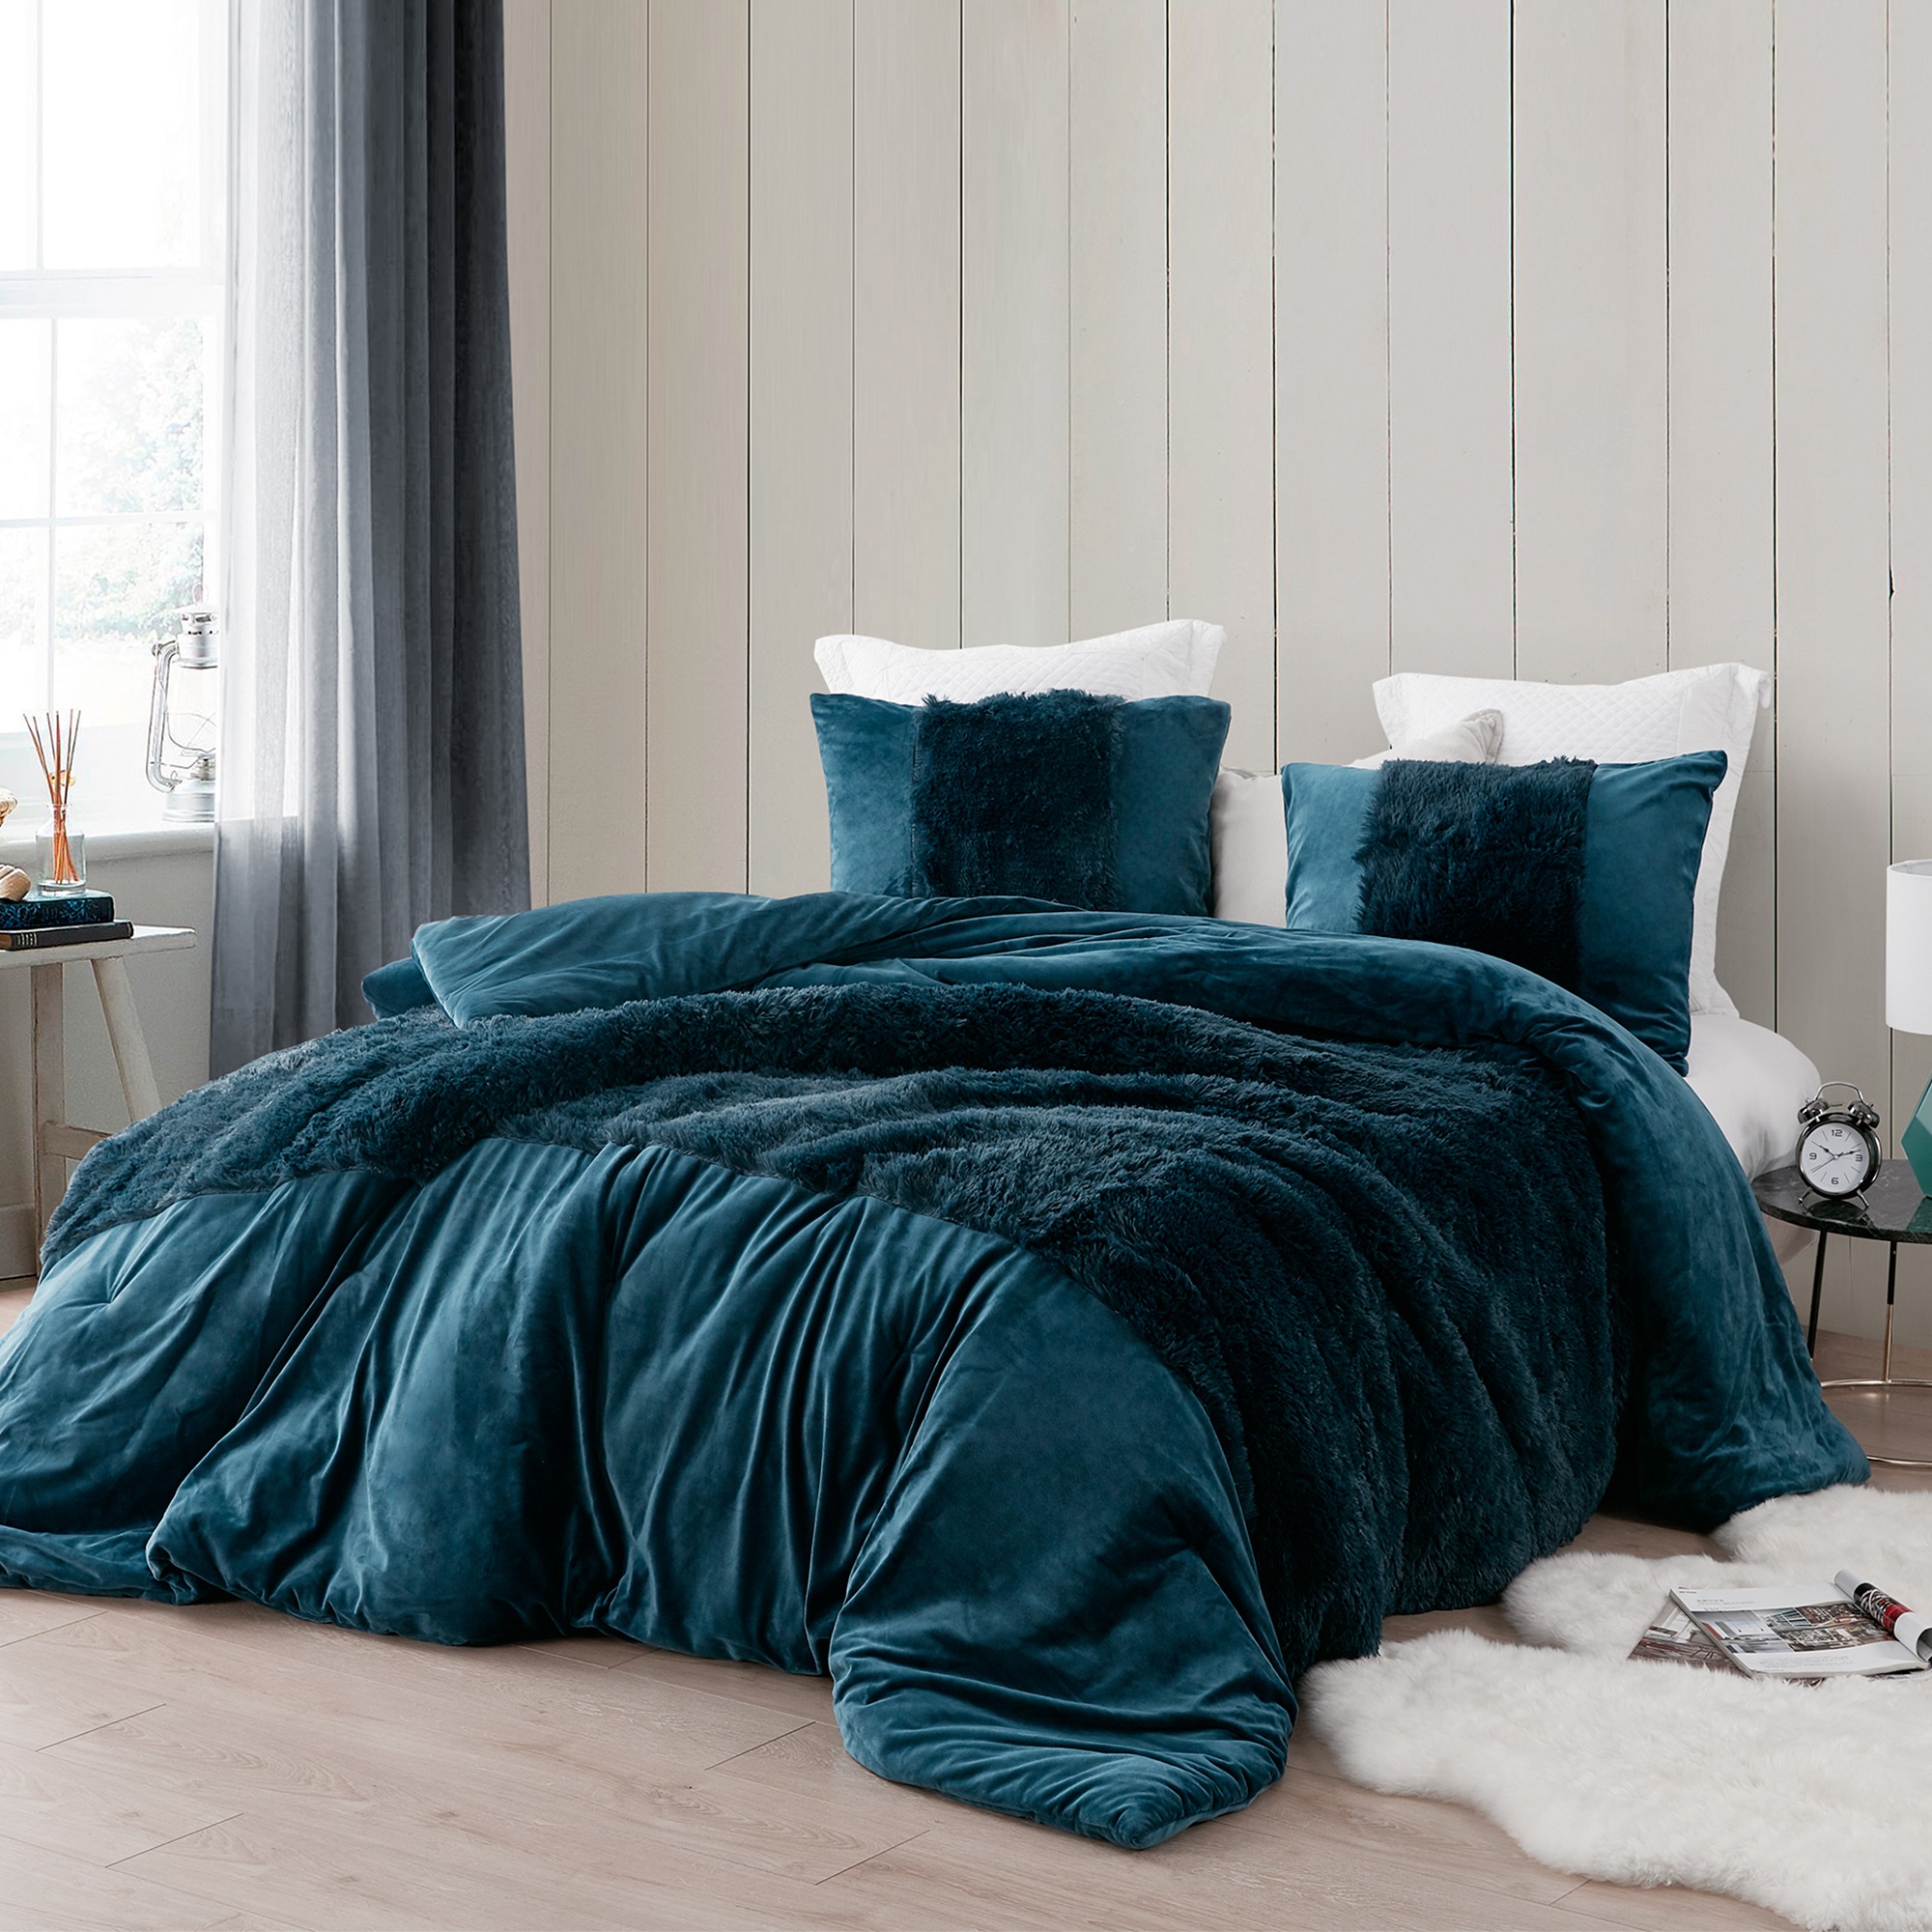 Coma Inducer Oversized Comforter - Are You Kidding? - Nightfall Navy